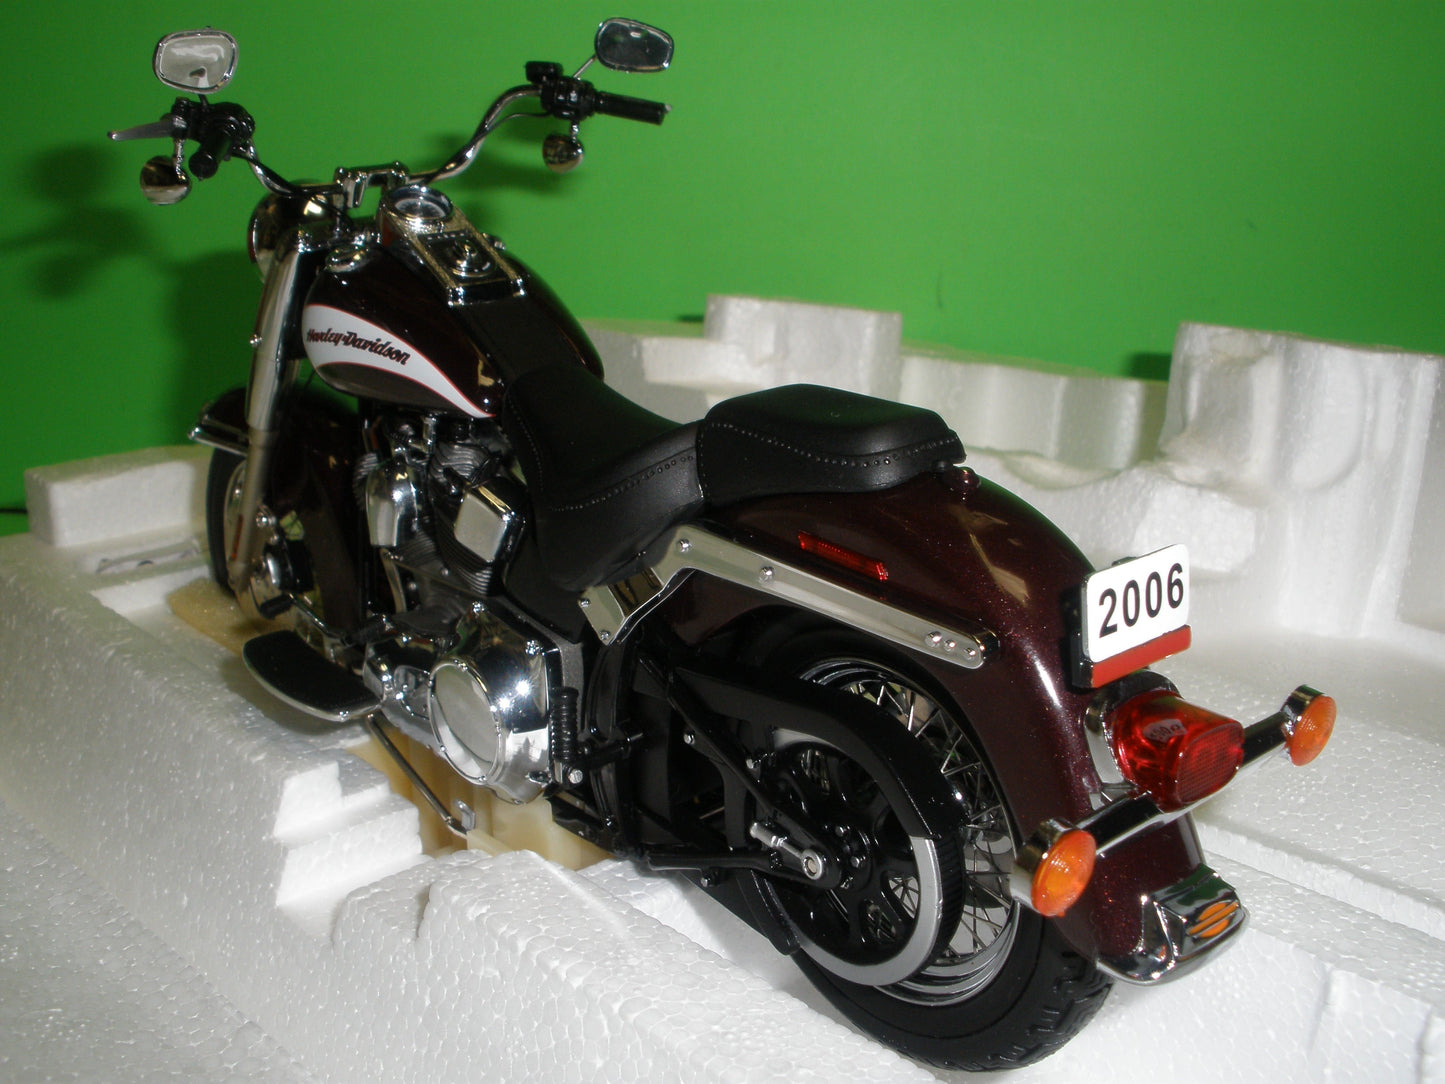 Harley Davidson 2006 Heritage Softail Motorcycle - B11E349